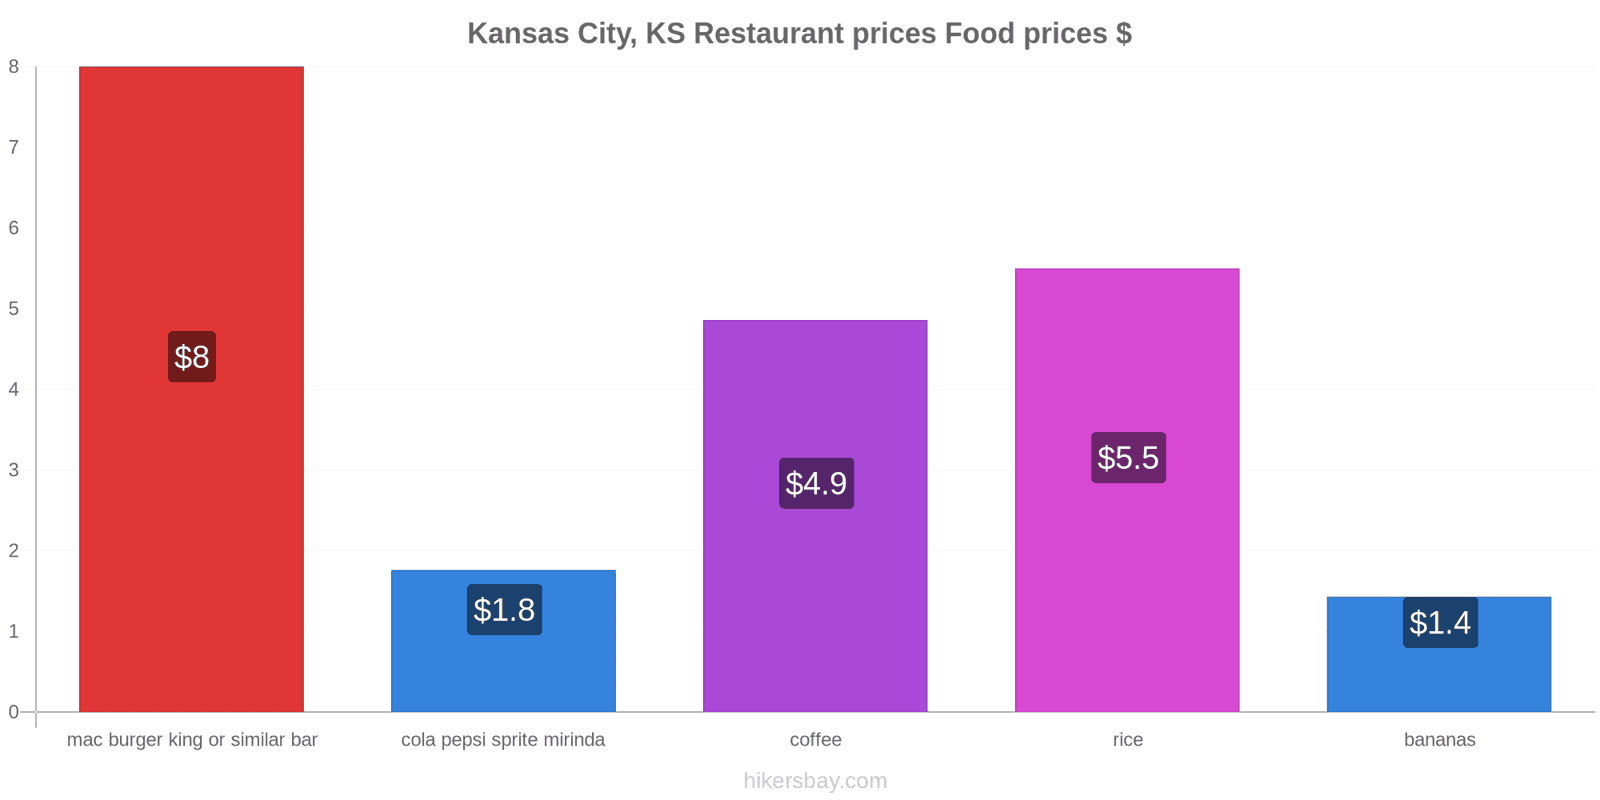 Kansas City, KS price changes hikersbay.com